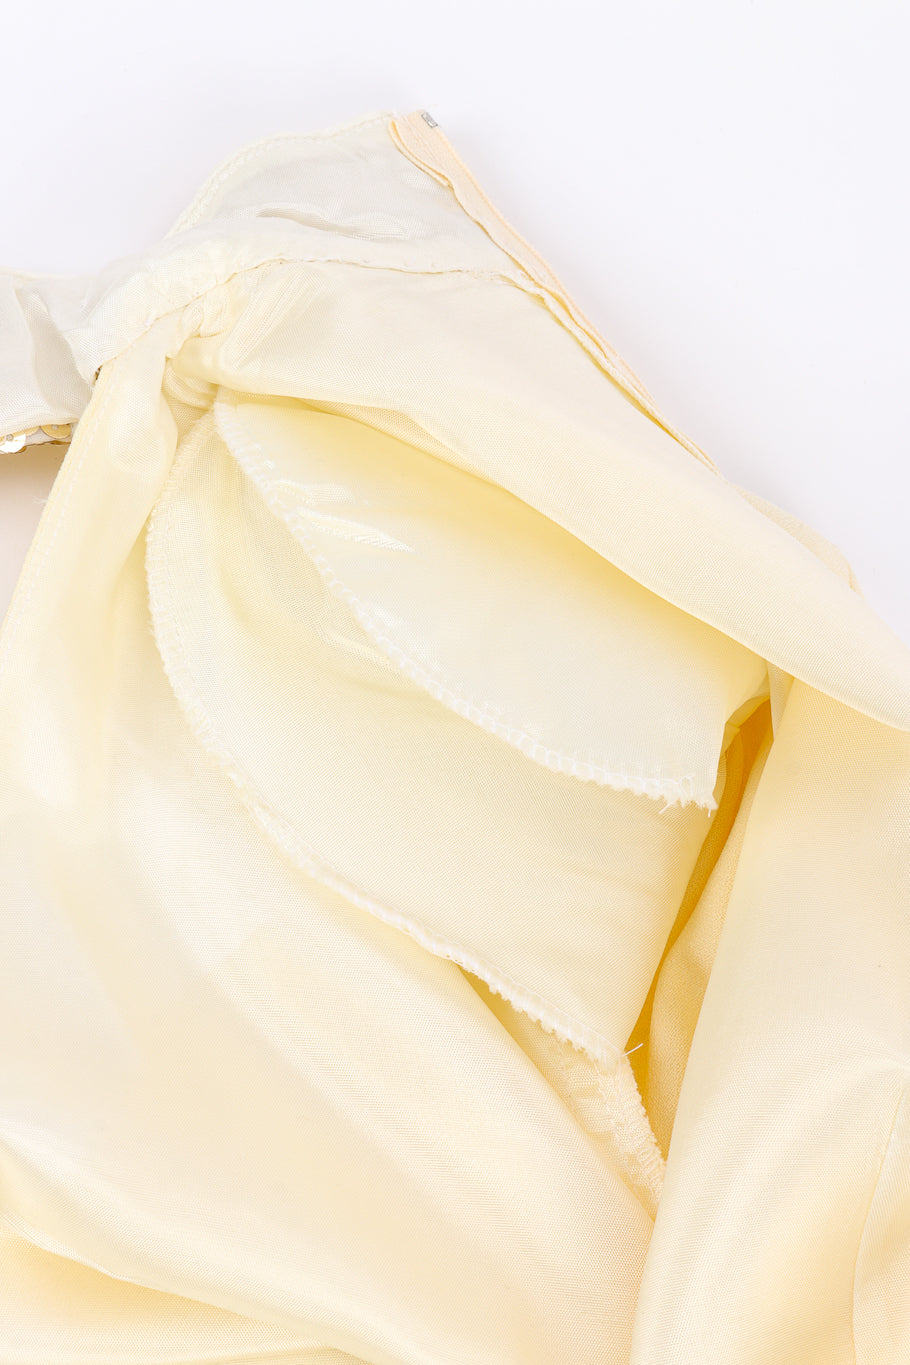 Sequin Fringe Drop Waist Dress by Climax shoulder pad @recessla